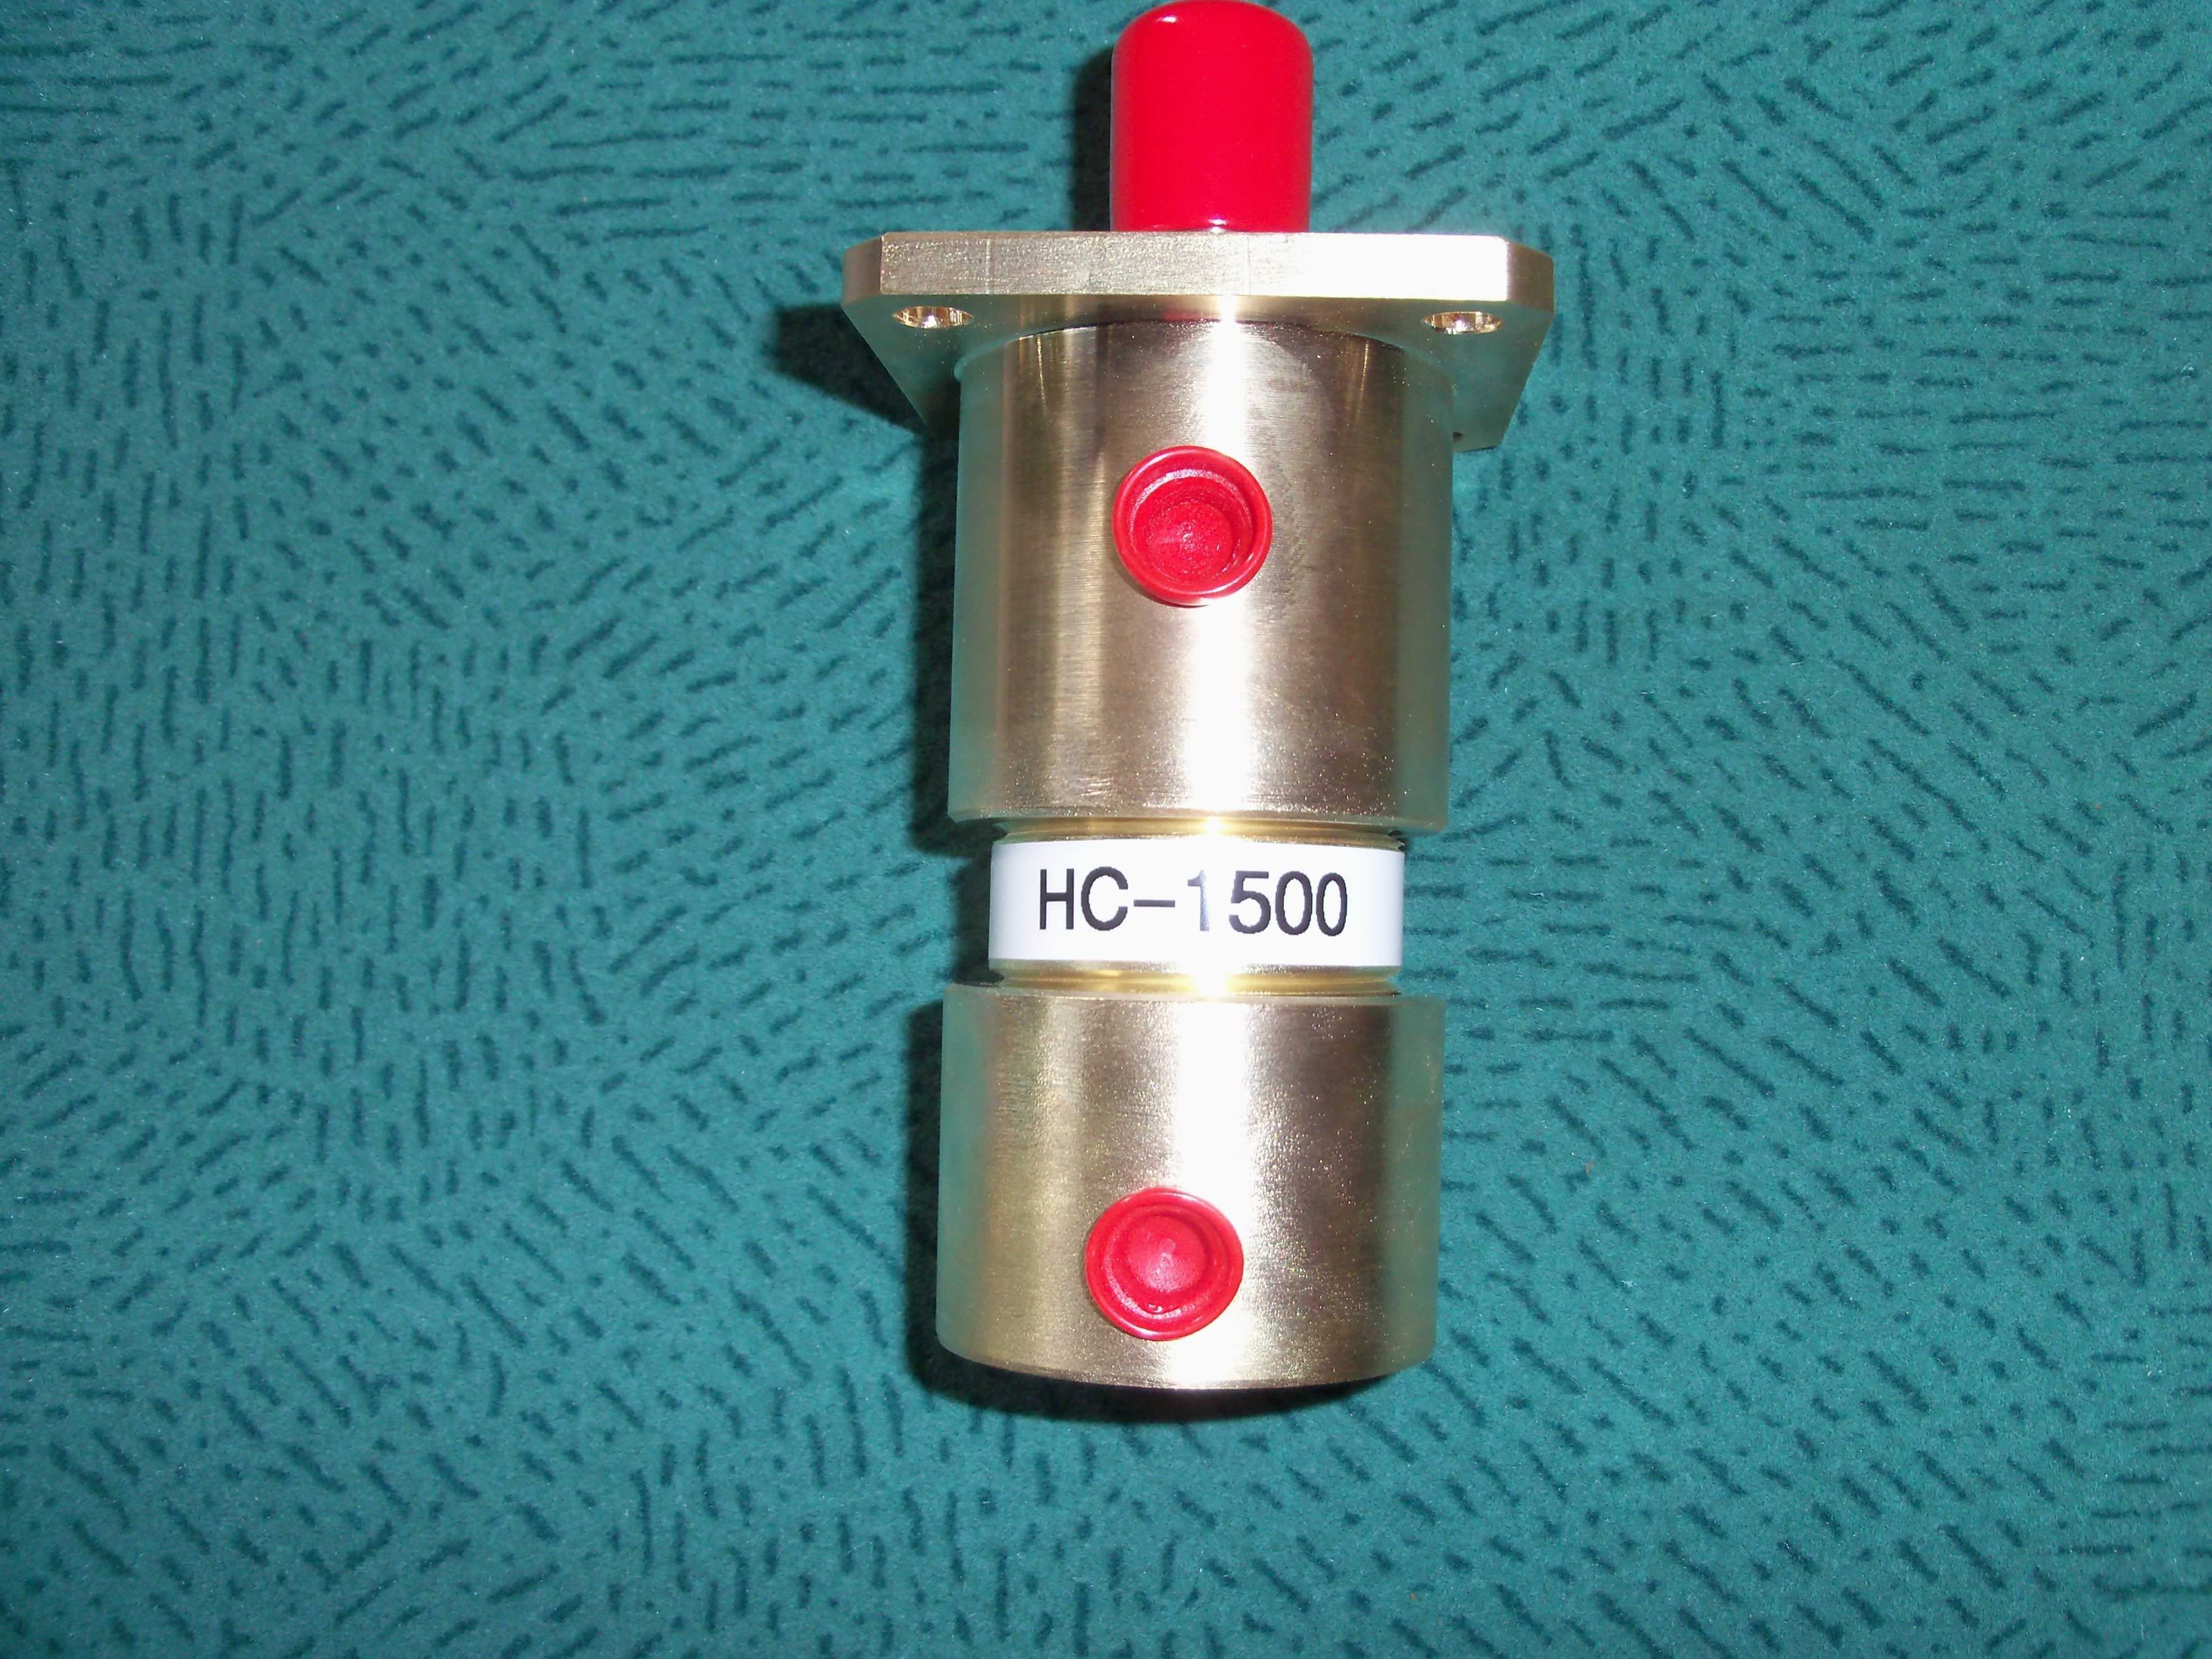 H-1500 Series High Pressure Pneumatic Cylinder